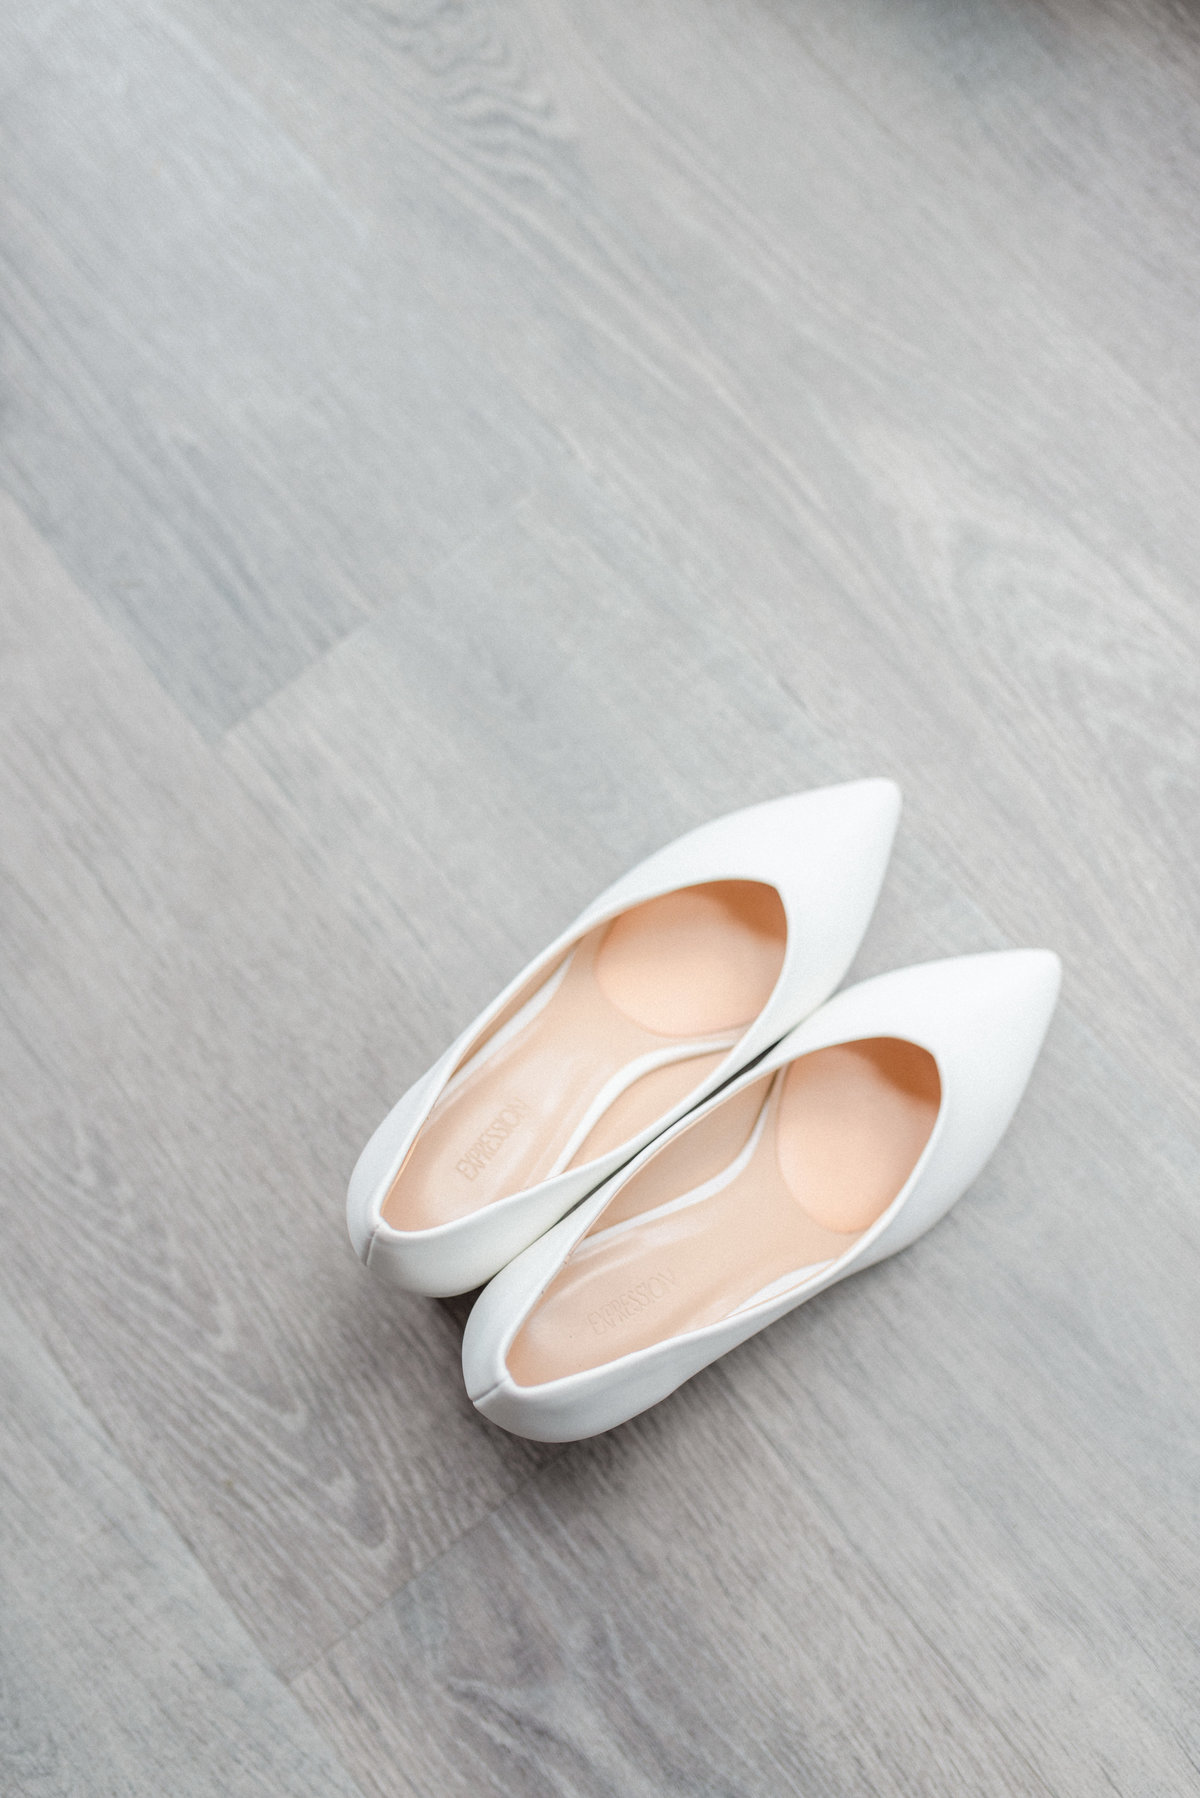 white patten shoes on grey hardwood floor